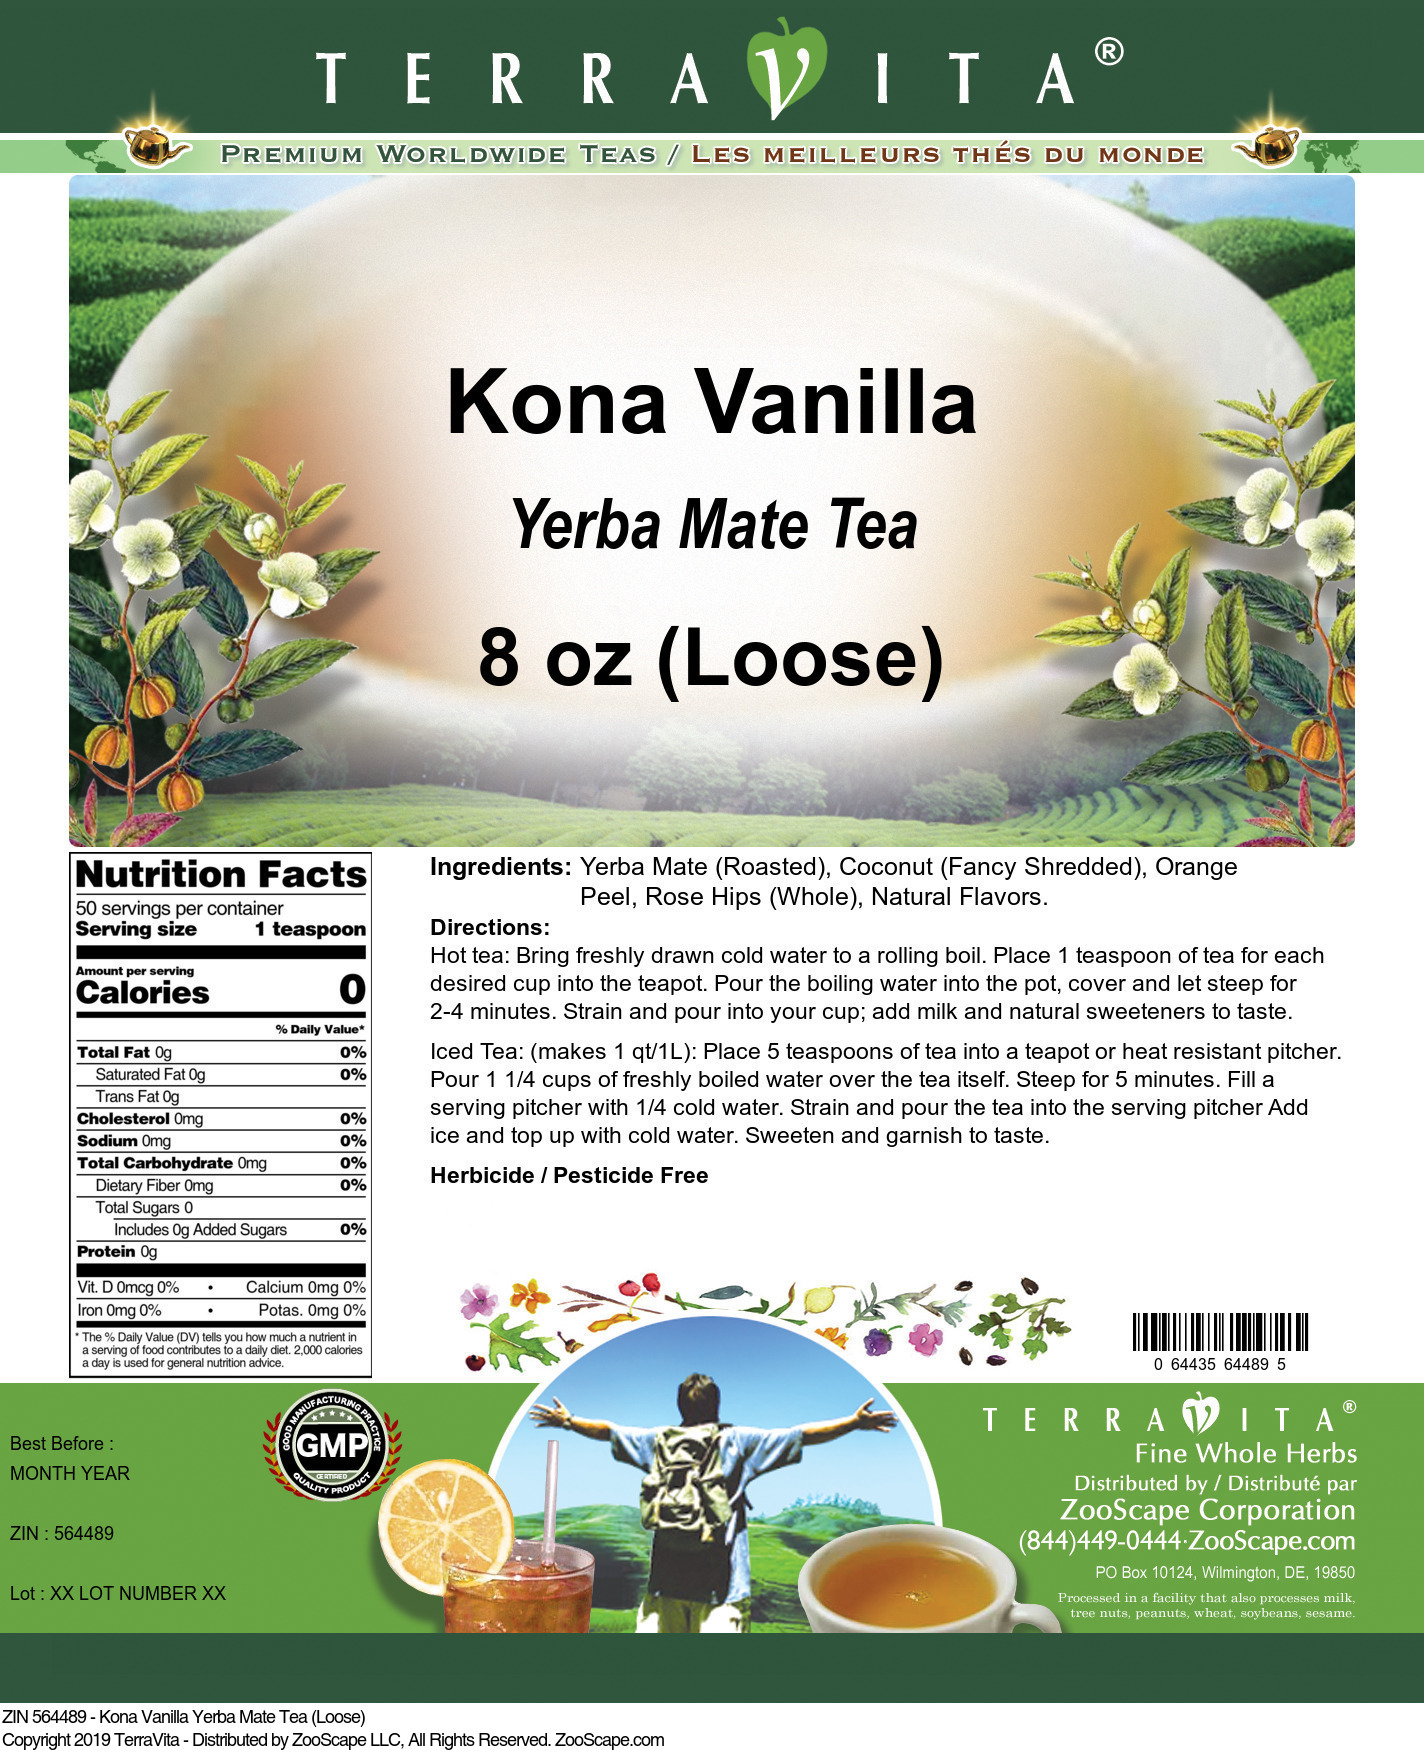 Kona Vanilla Yerba Mate Tea (Loose) - Label